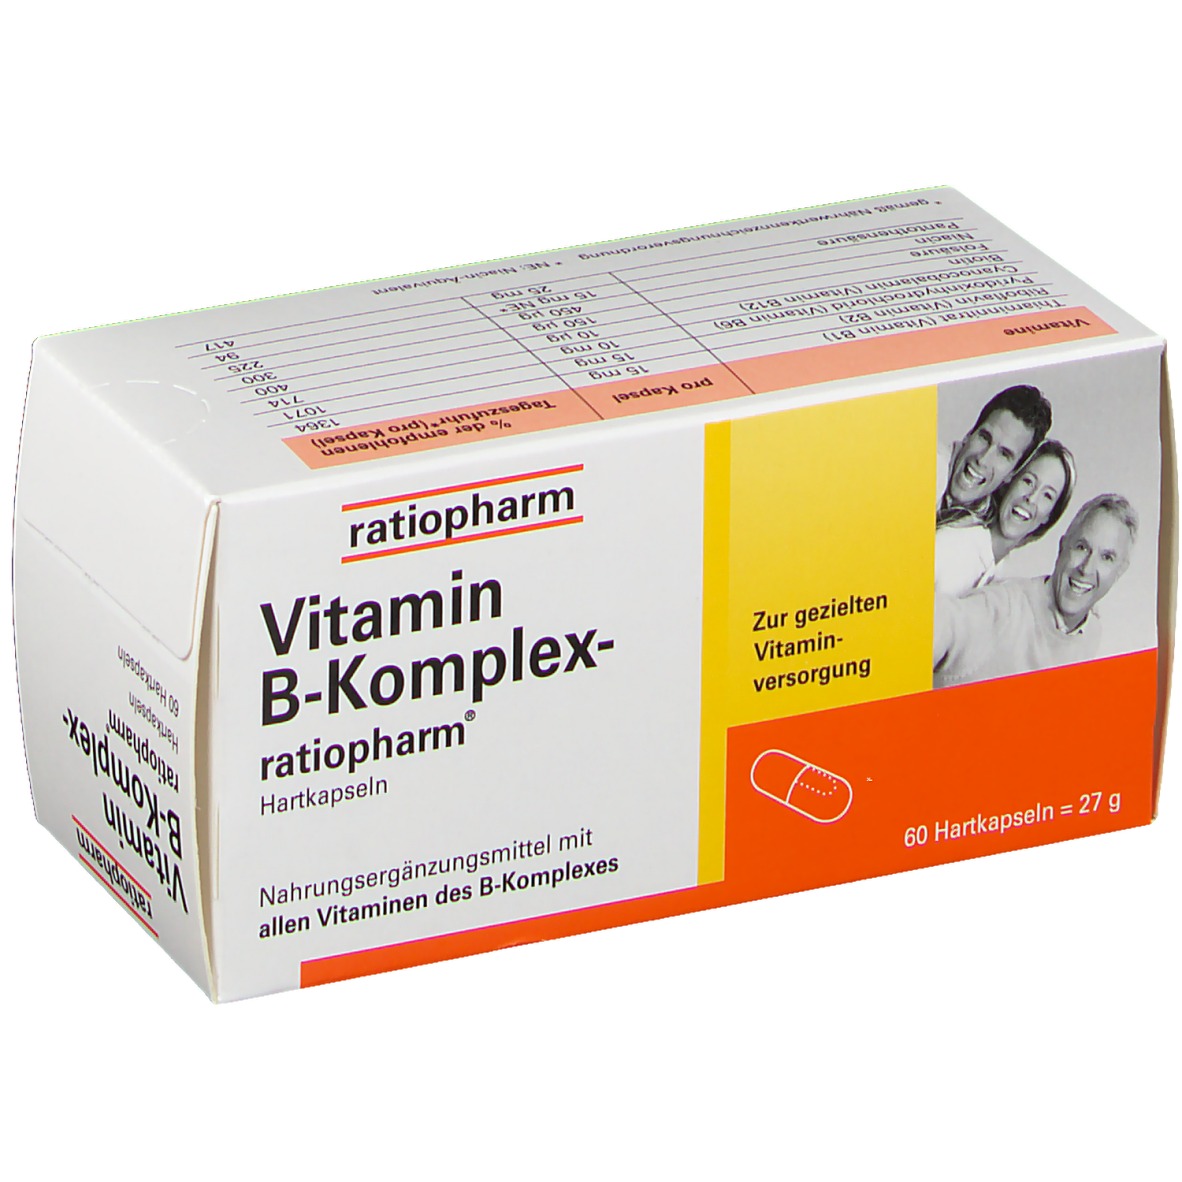 vitamin-b-komplex-ratiopharm-kapseln-shop-apotheke-at